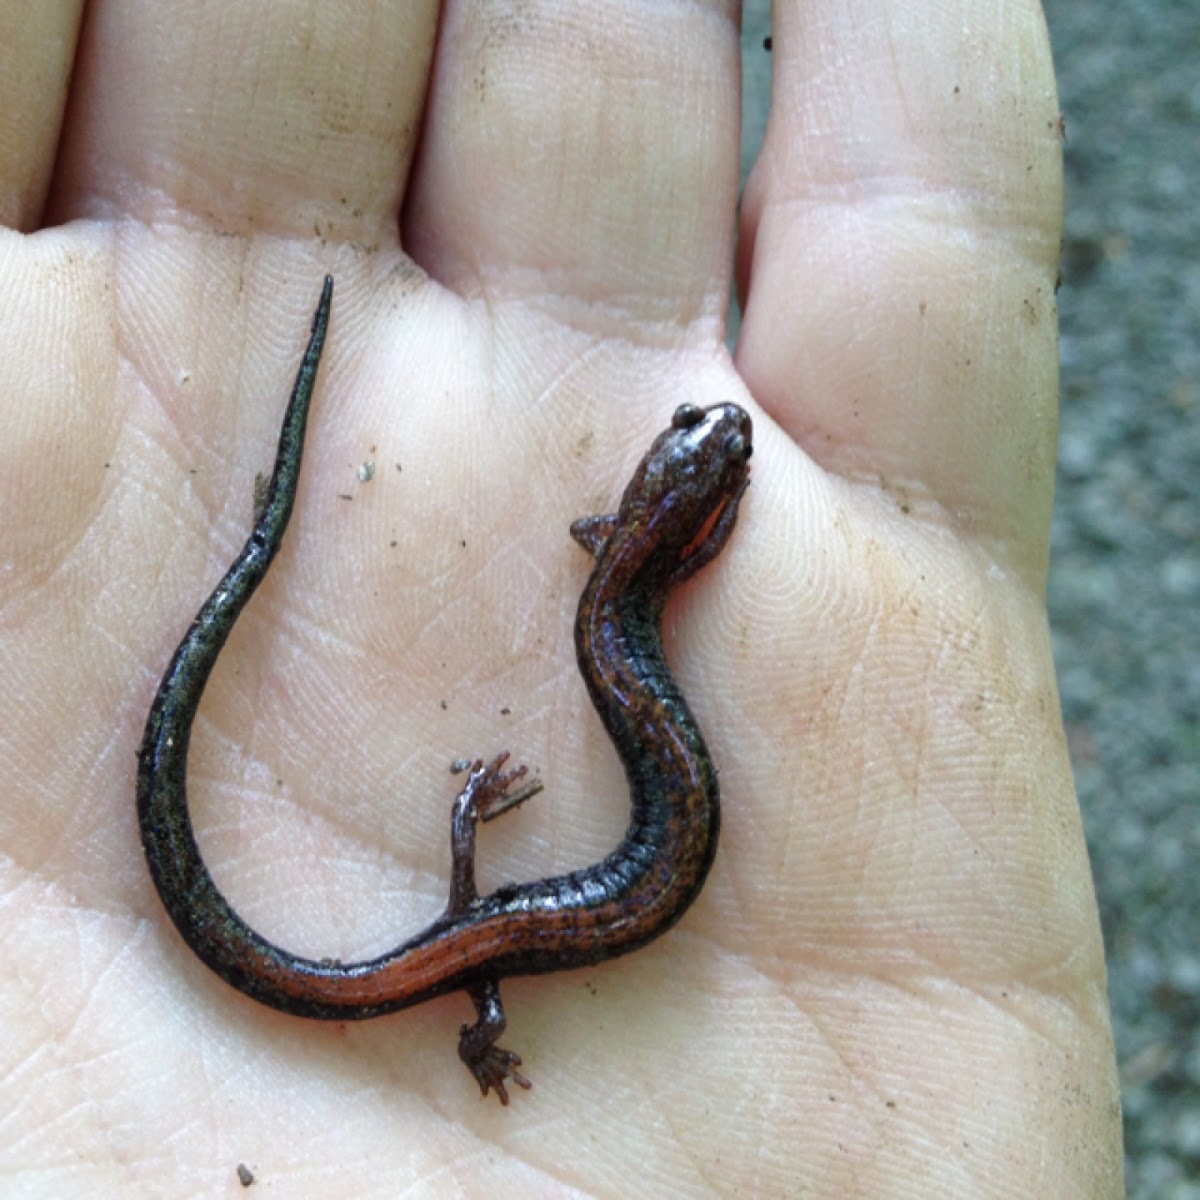 Red back salamander